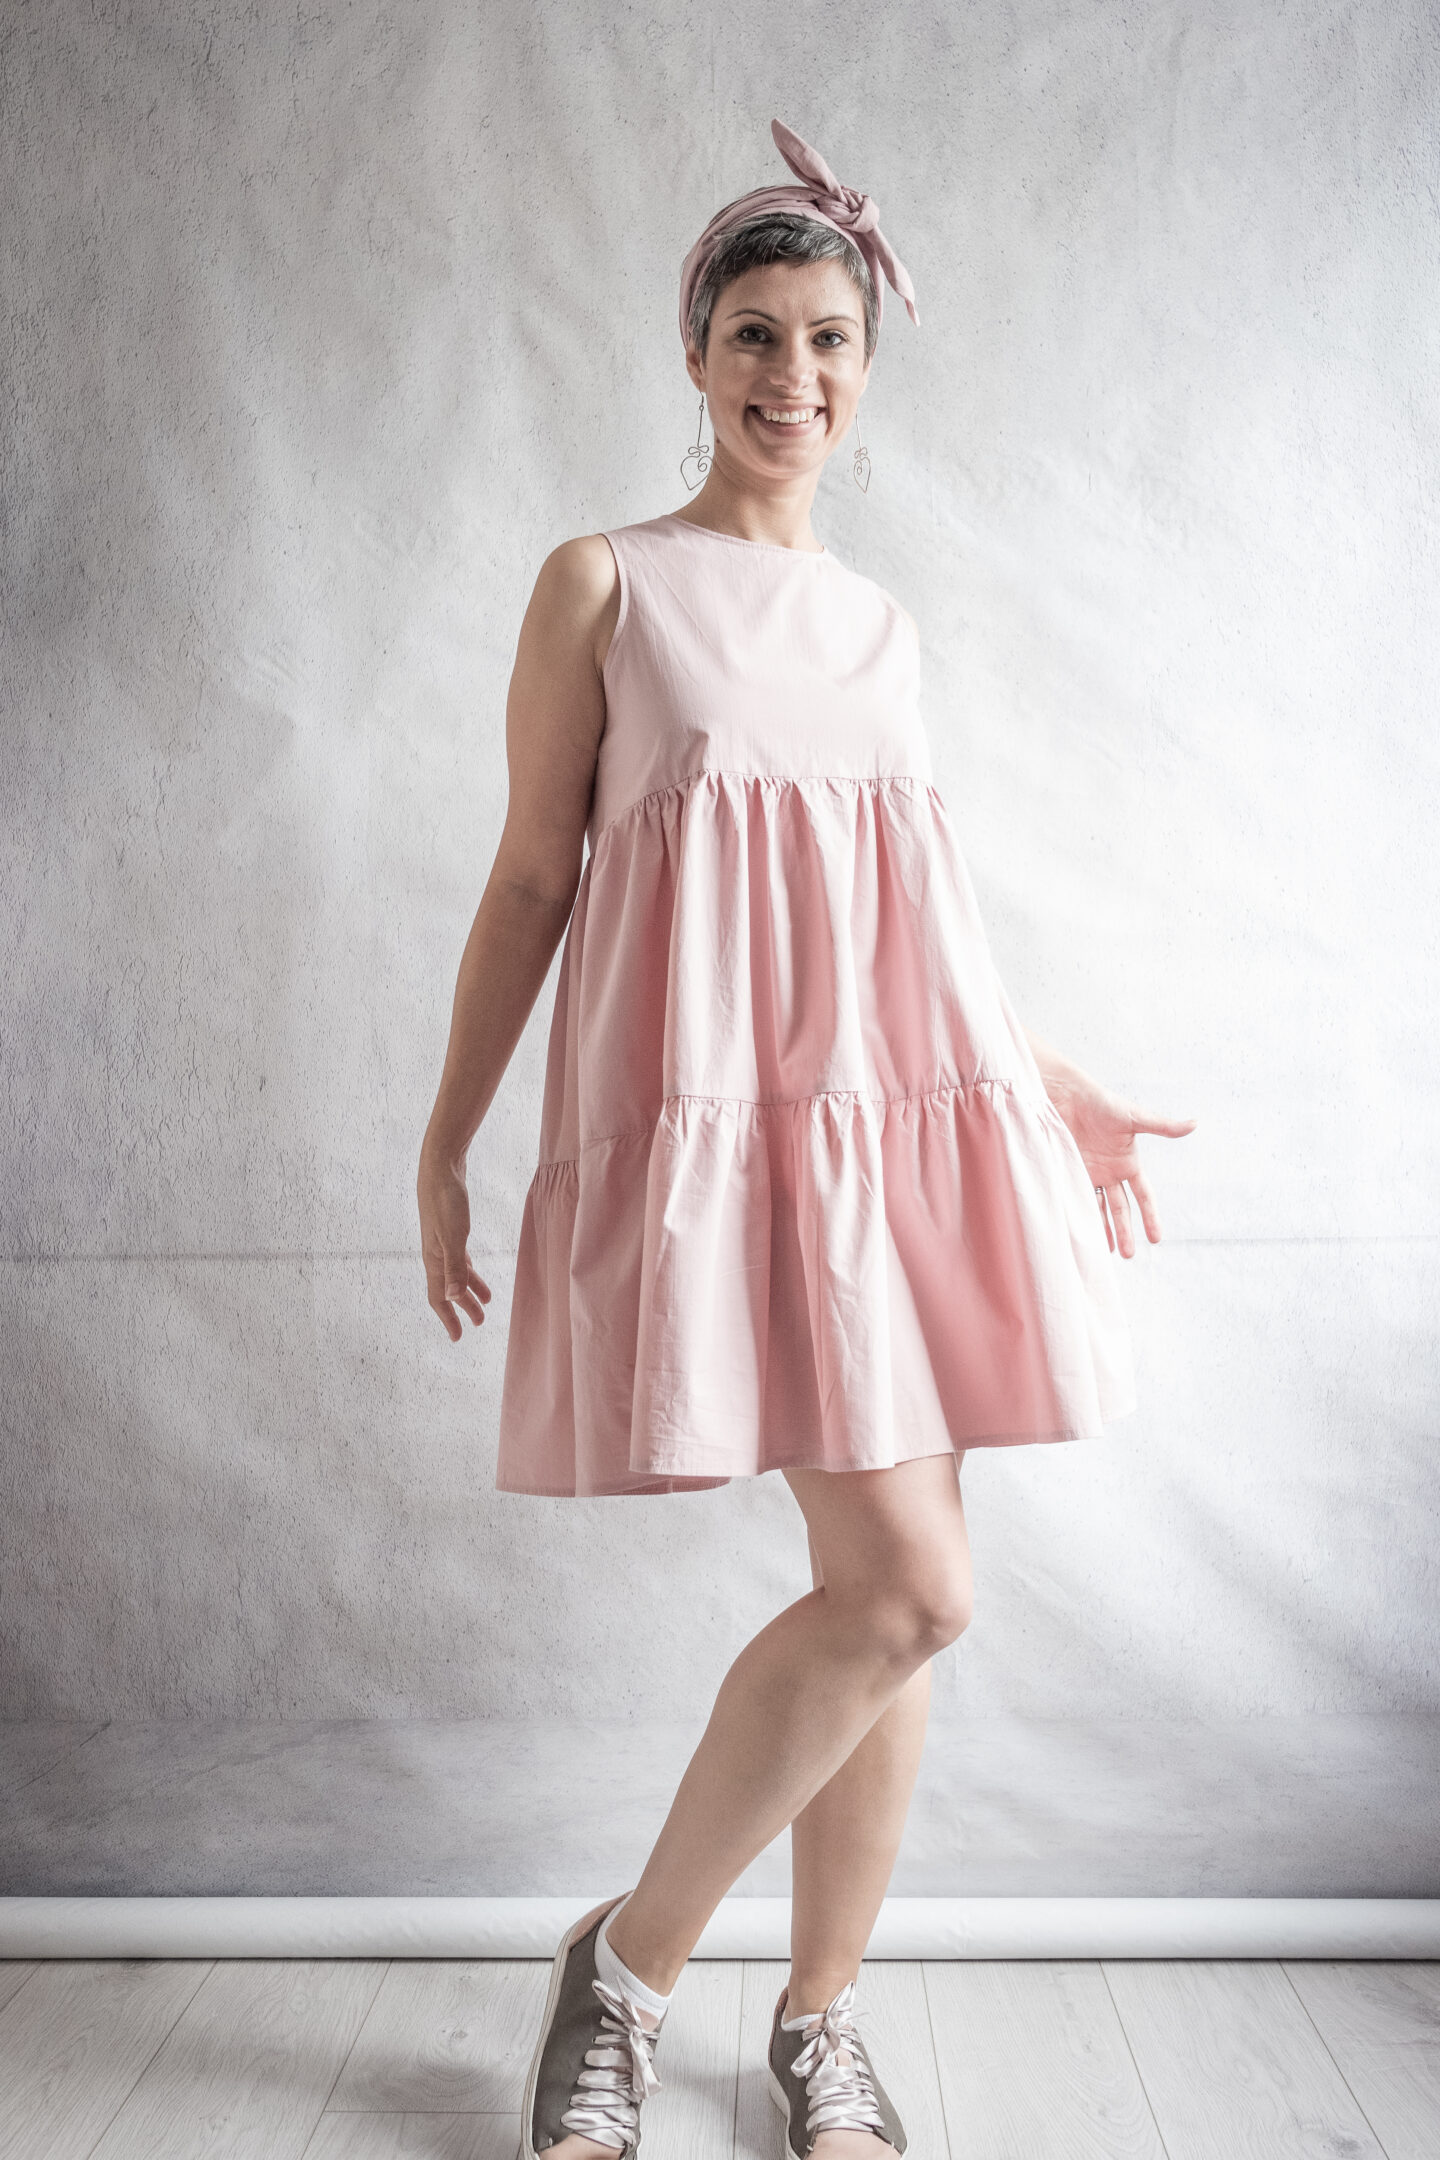 DIY Pink sleeveless tiered dress in cotton poplin made using Fibre Mood Mira sewing pattern